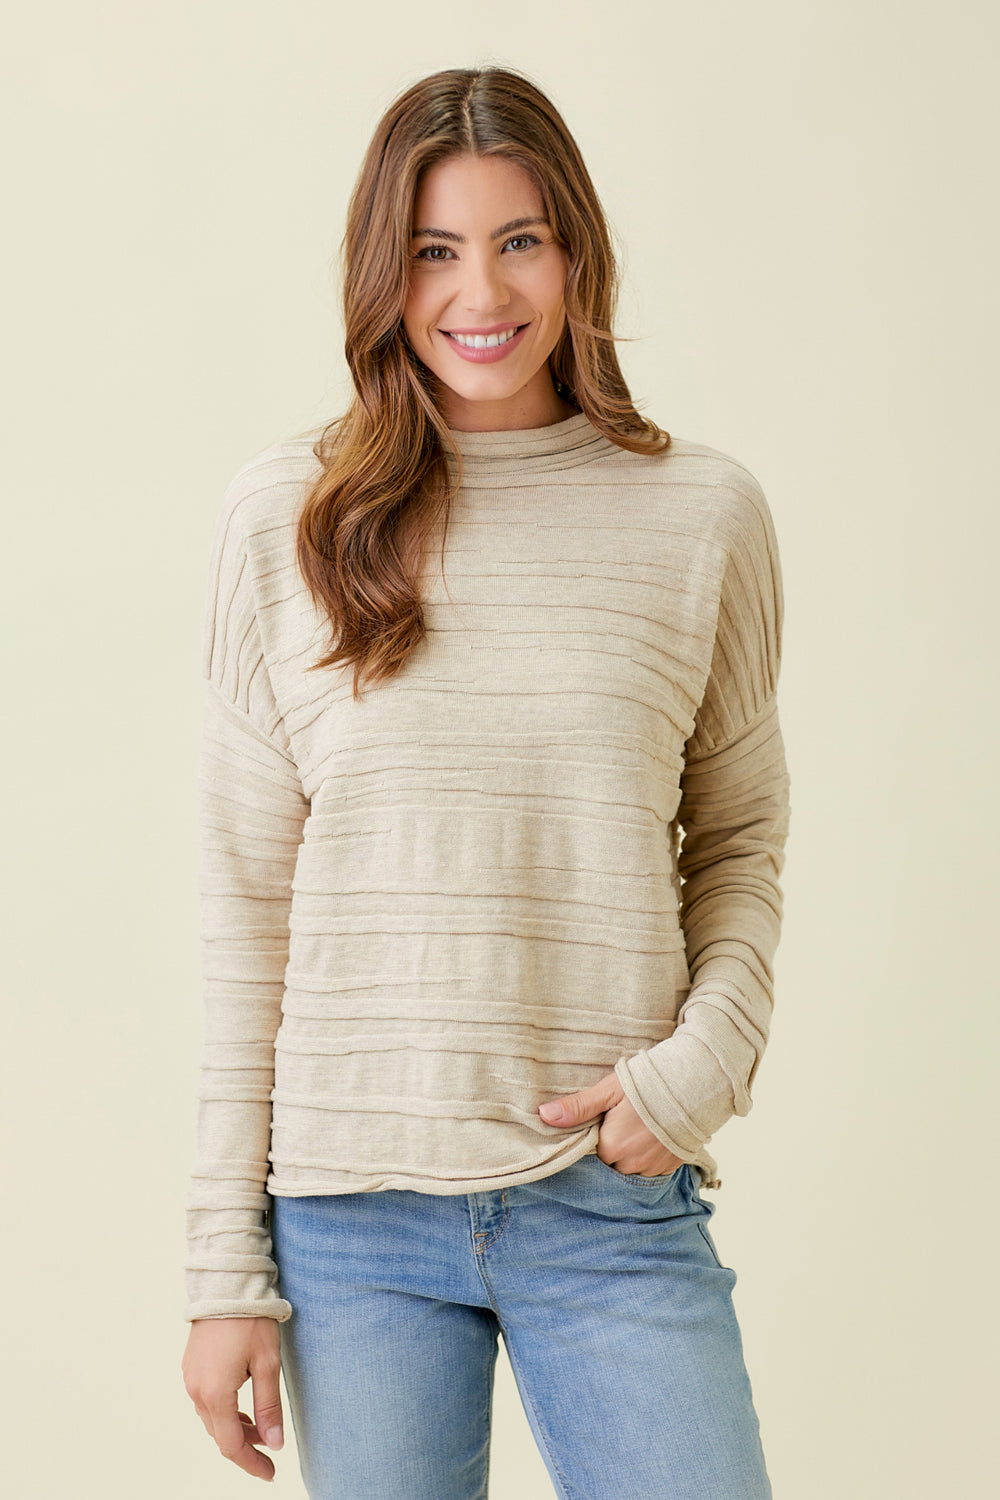 Textured Sweater Top